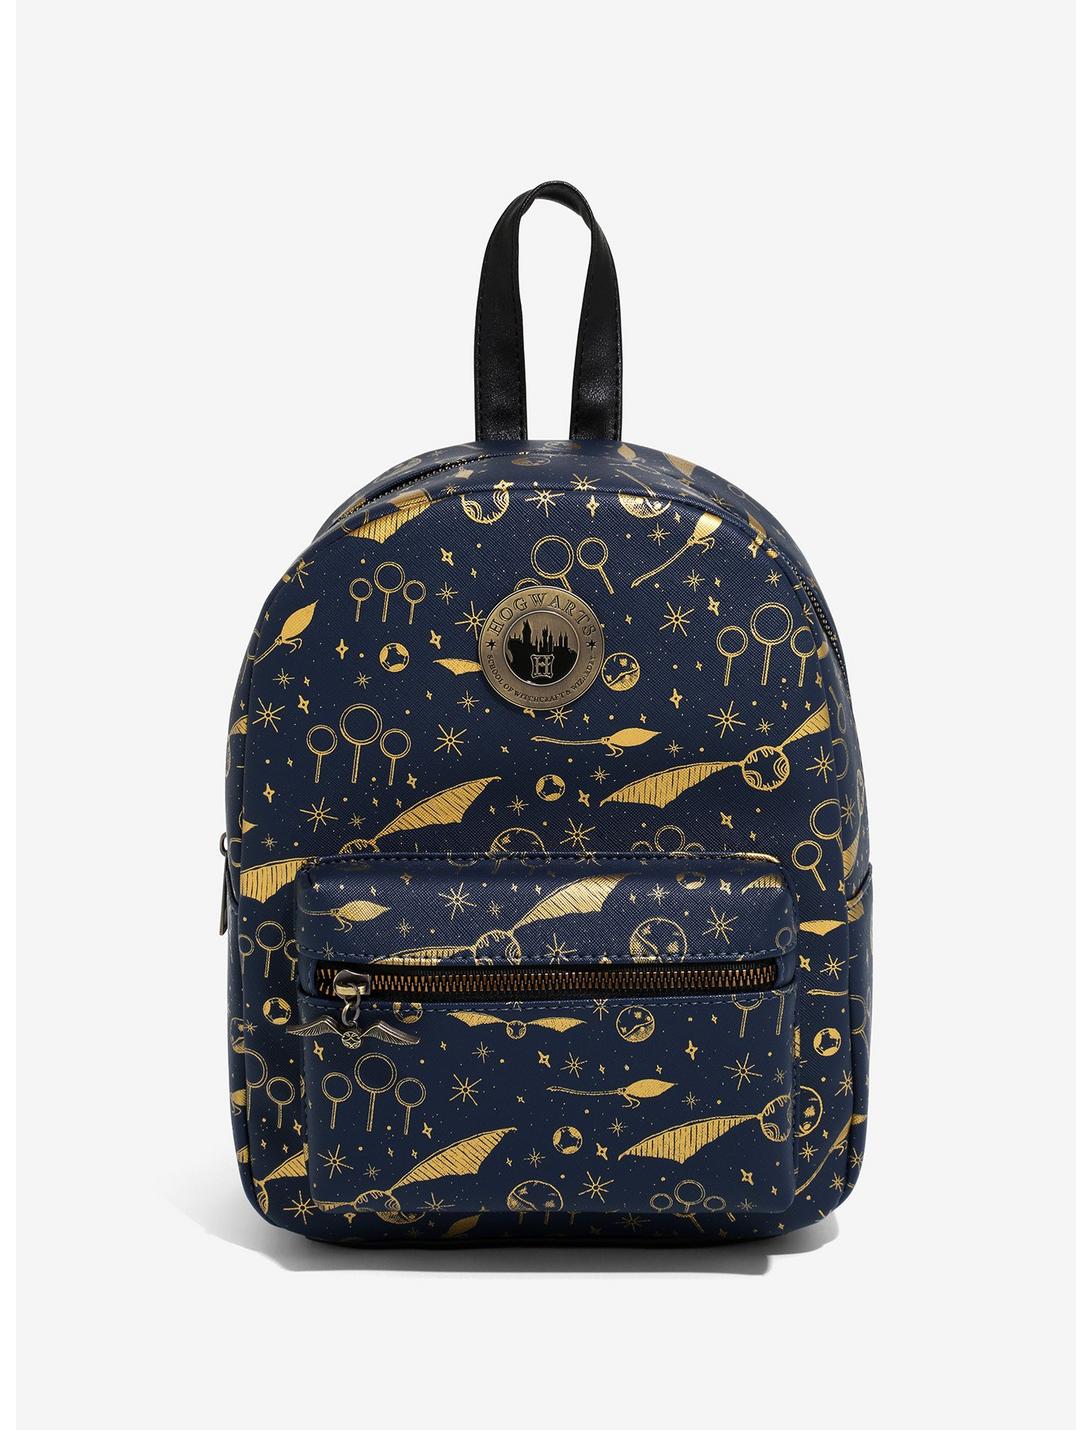 Harry Potter Navy & Gold Quidditch Mini Backpack, , hi-res